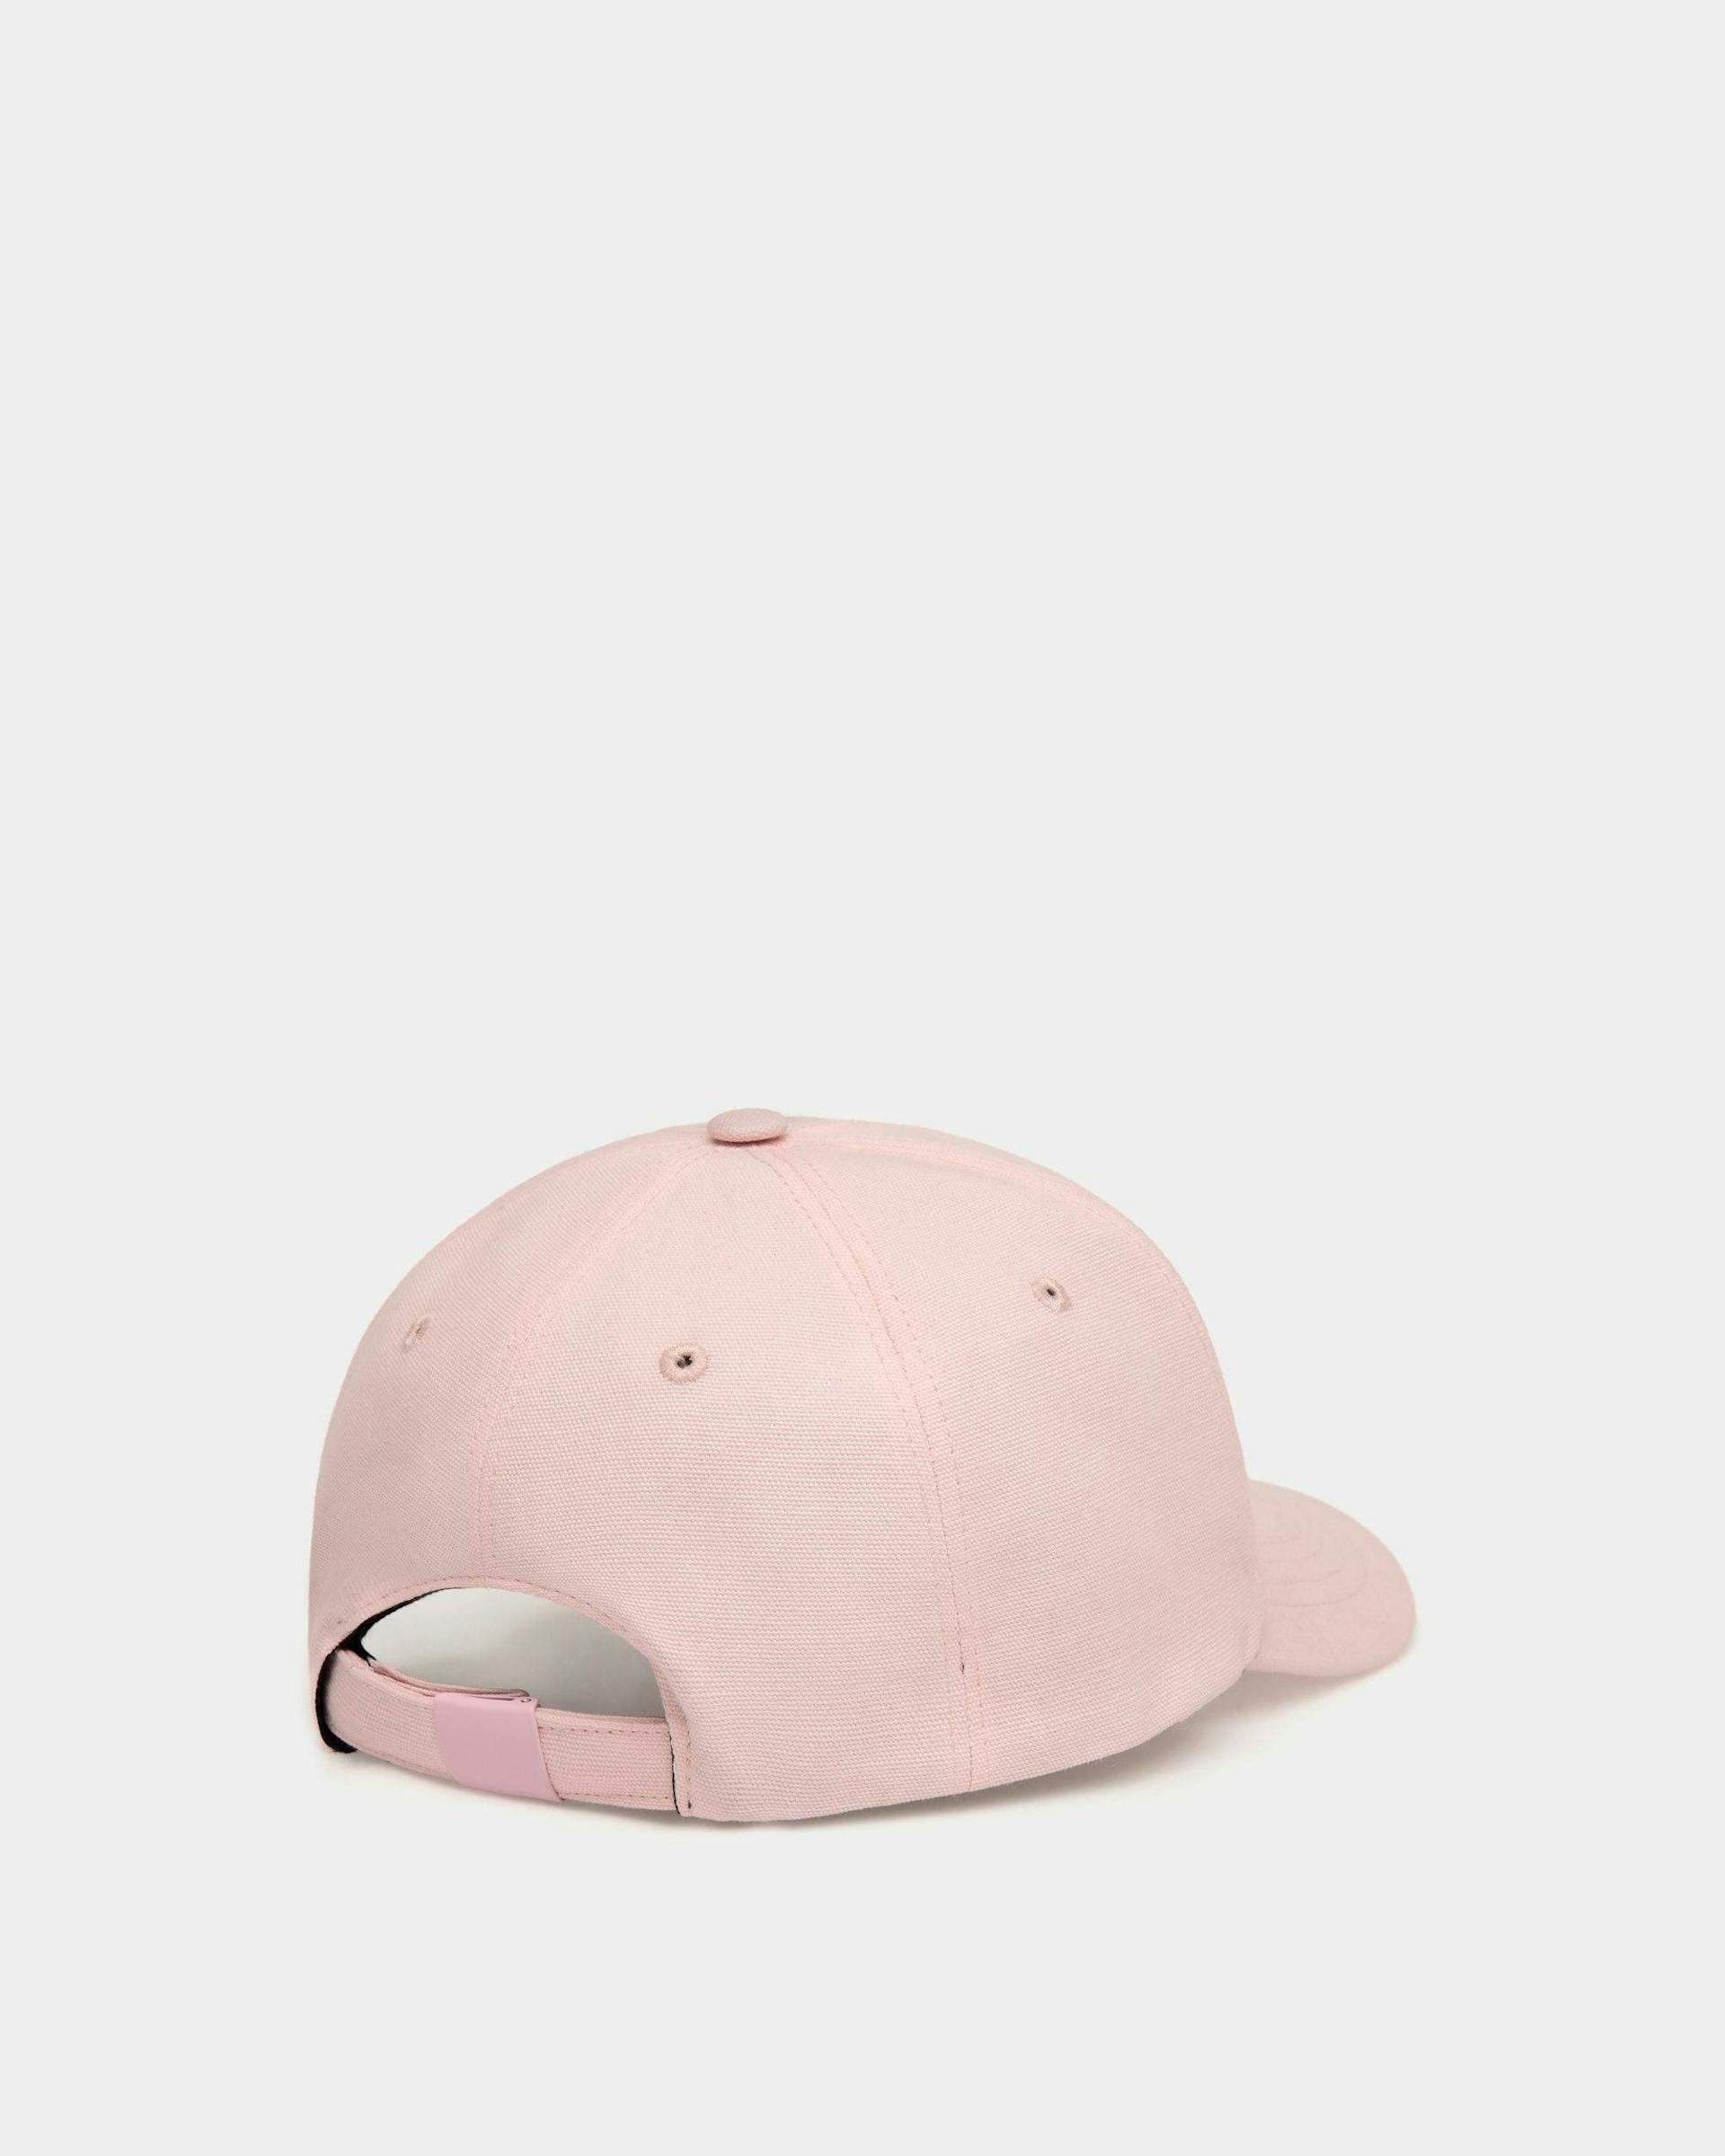 Women's Baseball Hat in Pink Cotton | Bally | Still Life 3/4 Back